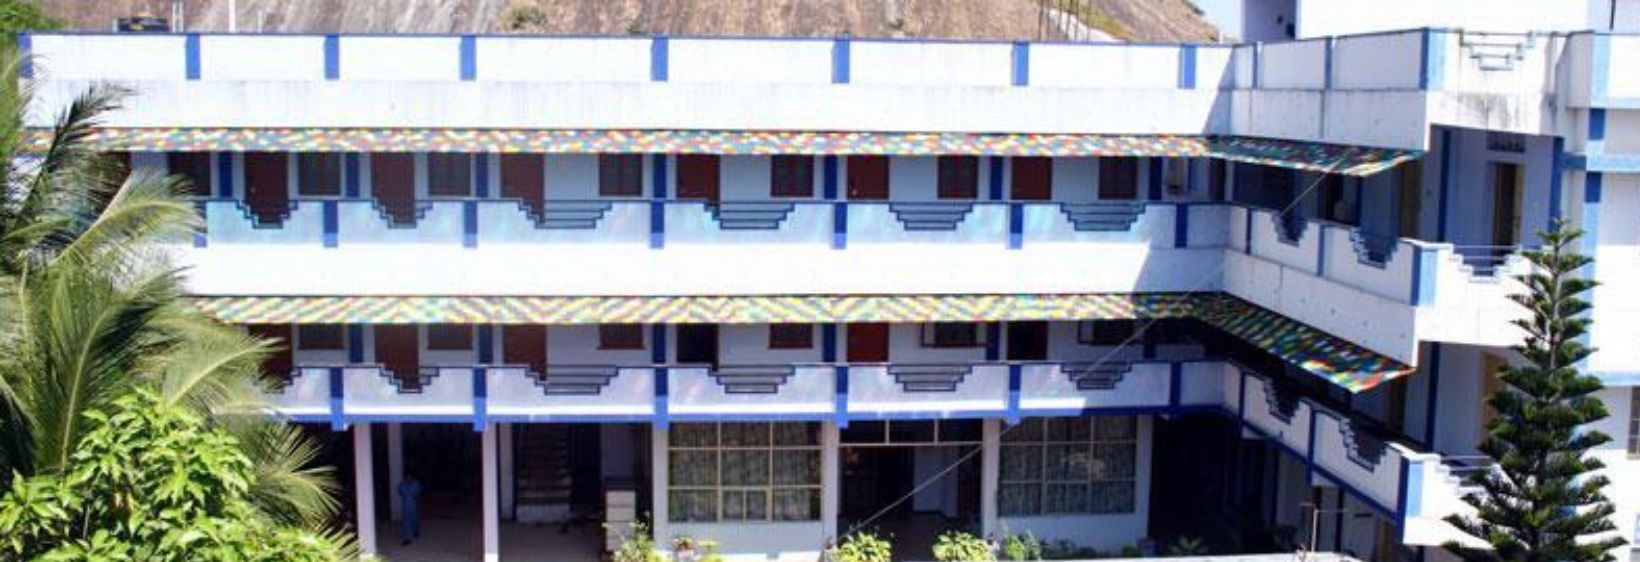 Royal College of Nursing - Coimbatore